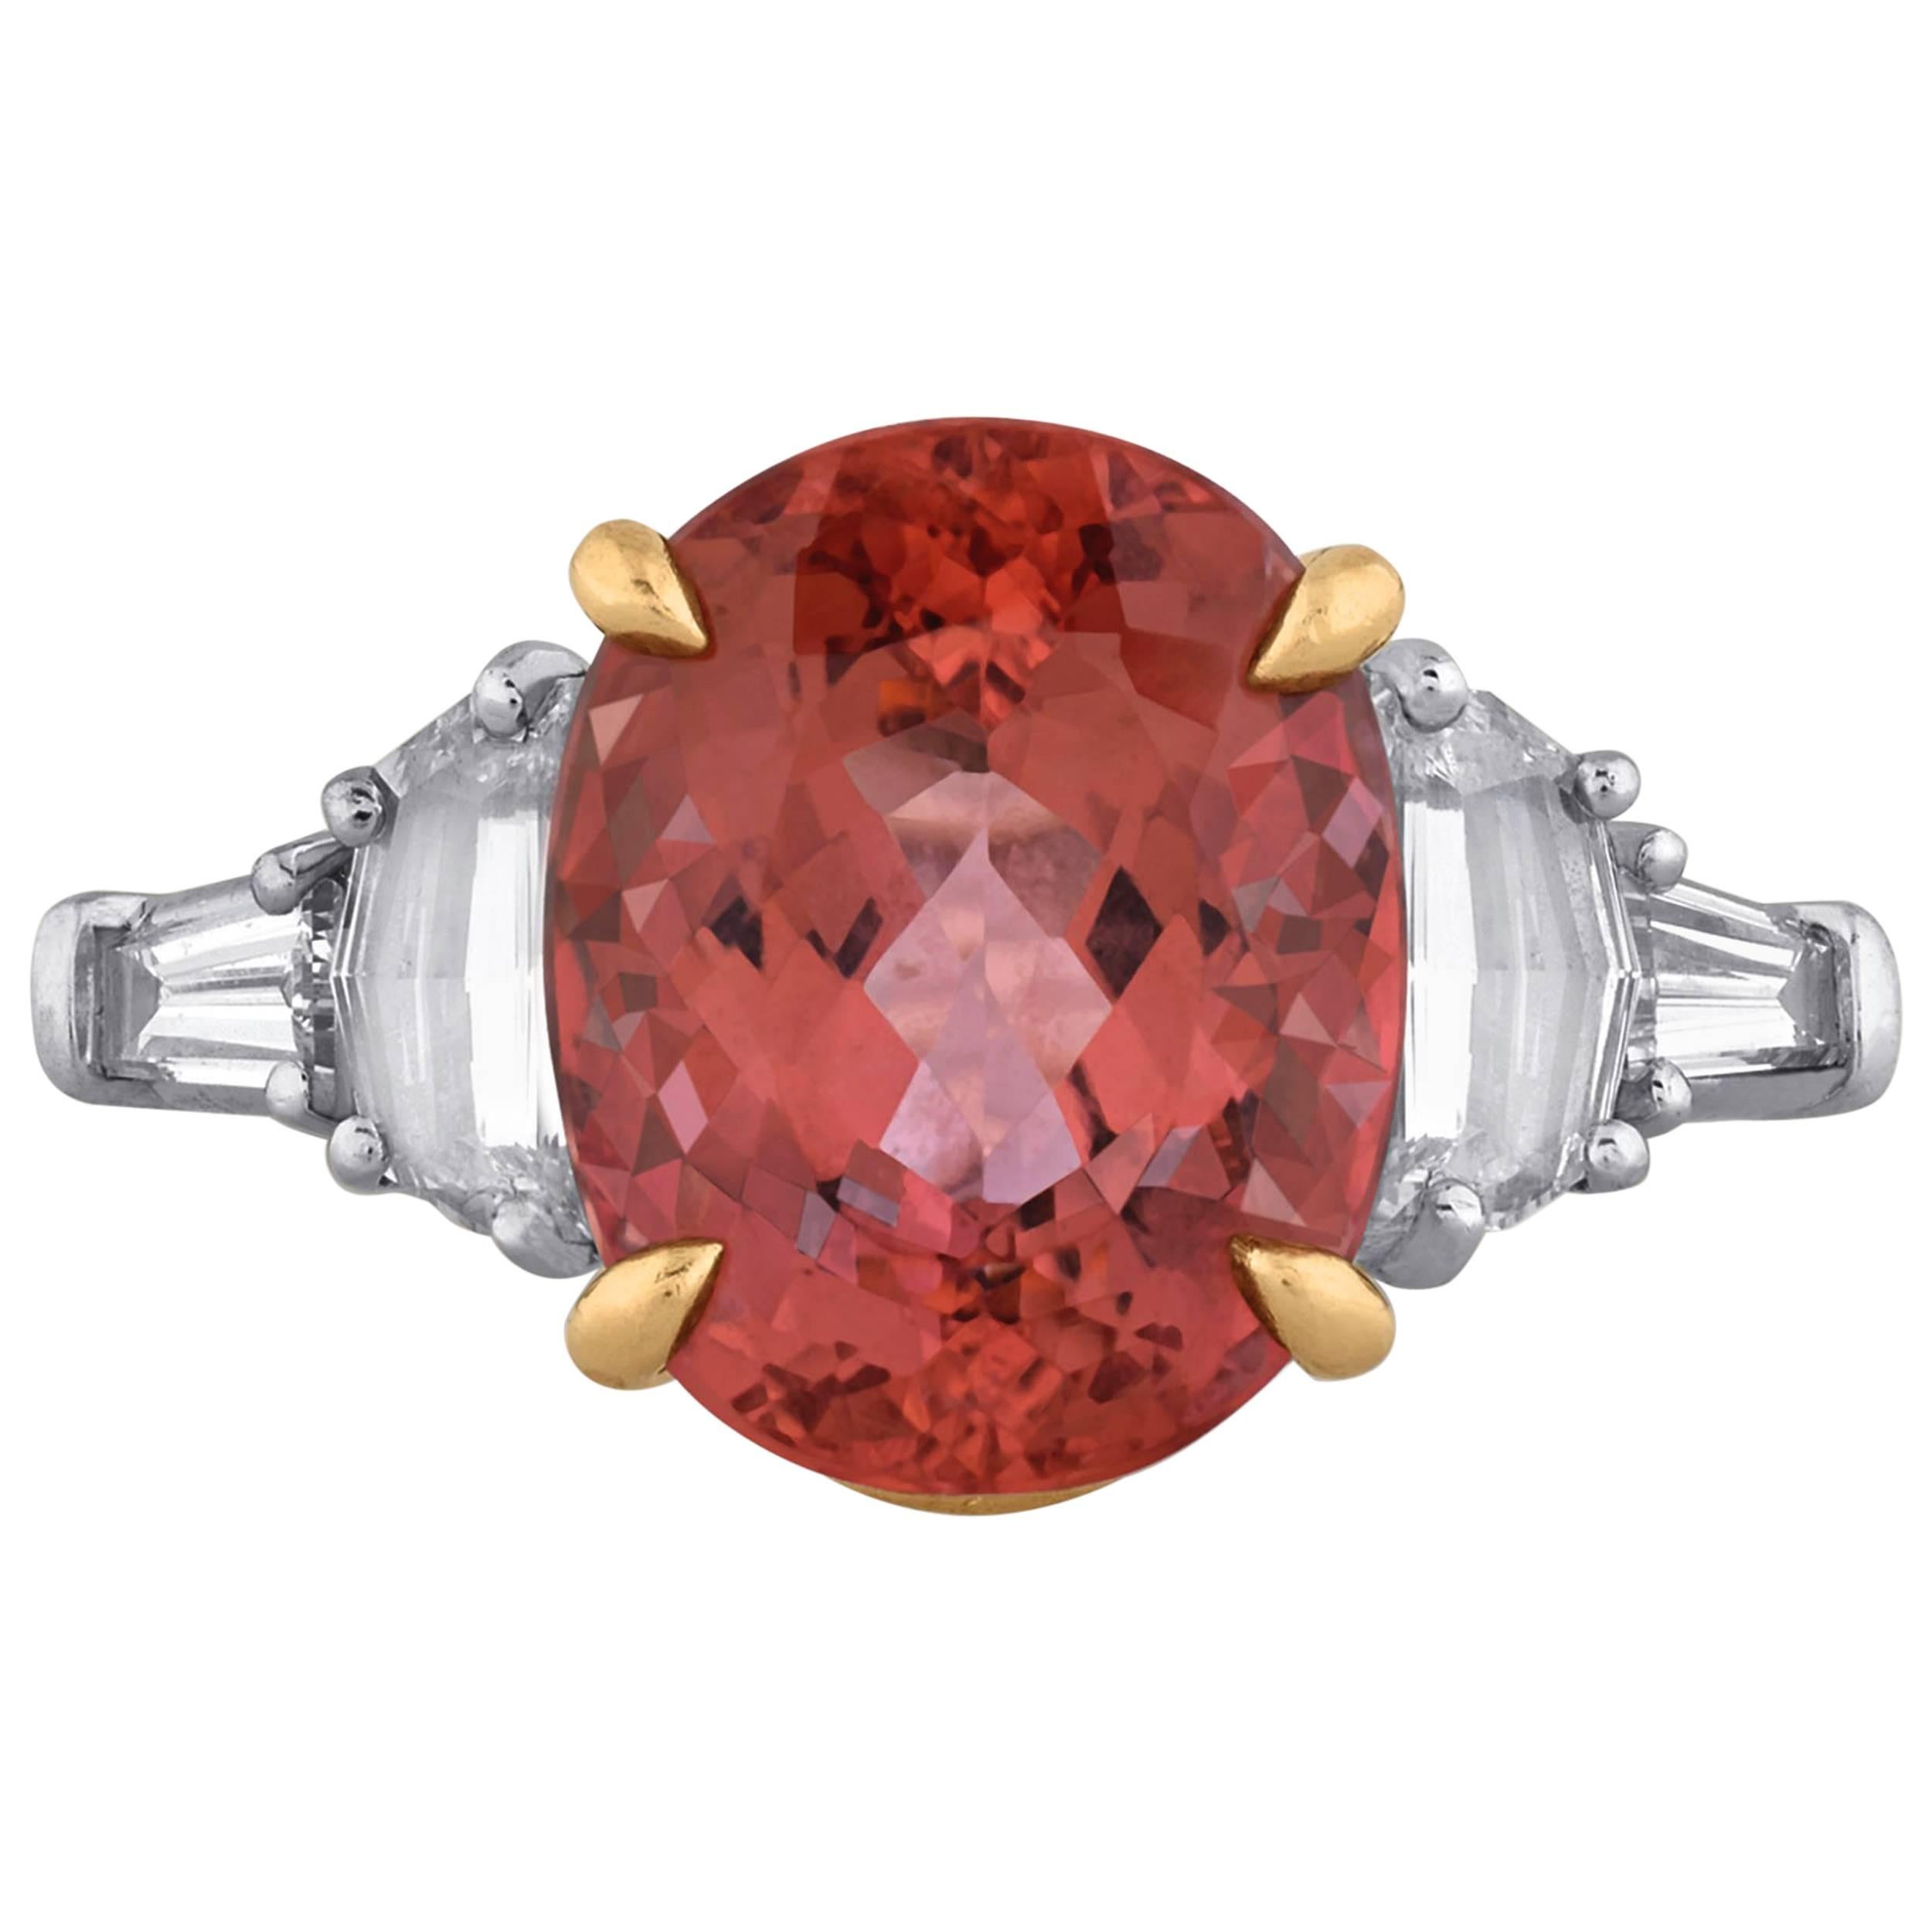 Pinkish-Orange Topaz and Diamond Ring by Tiffany & Co.